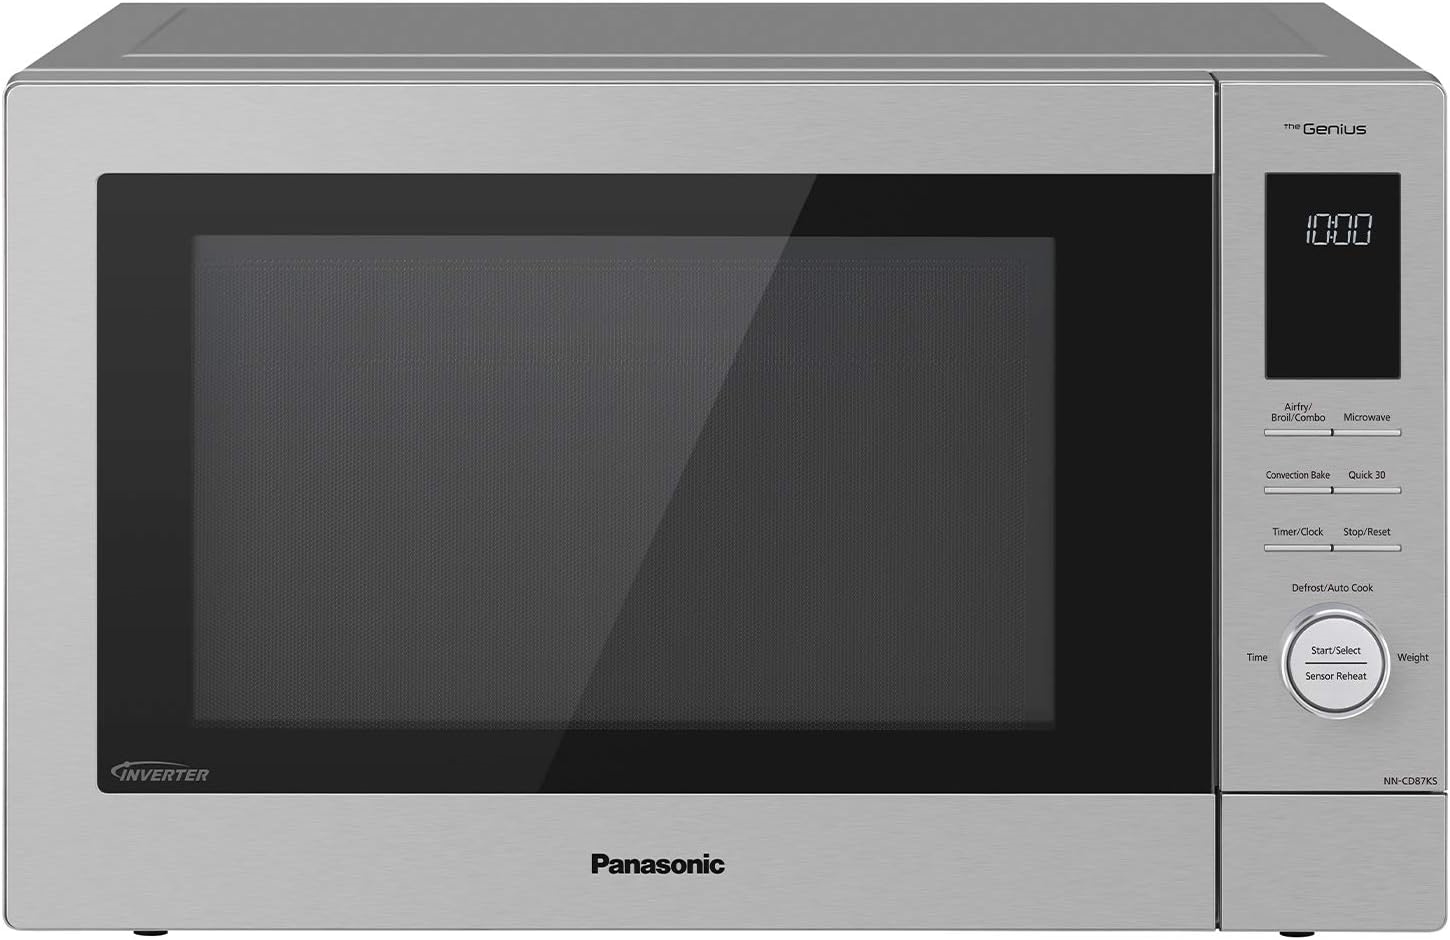 Panasonic HomeChef Microwave Toaster Oven | DeviceDaily.com